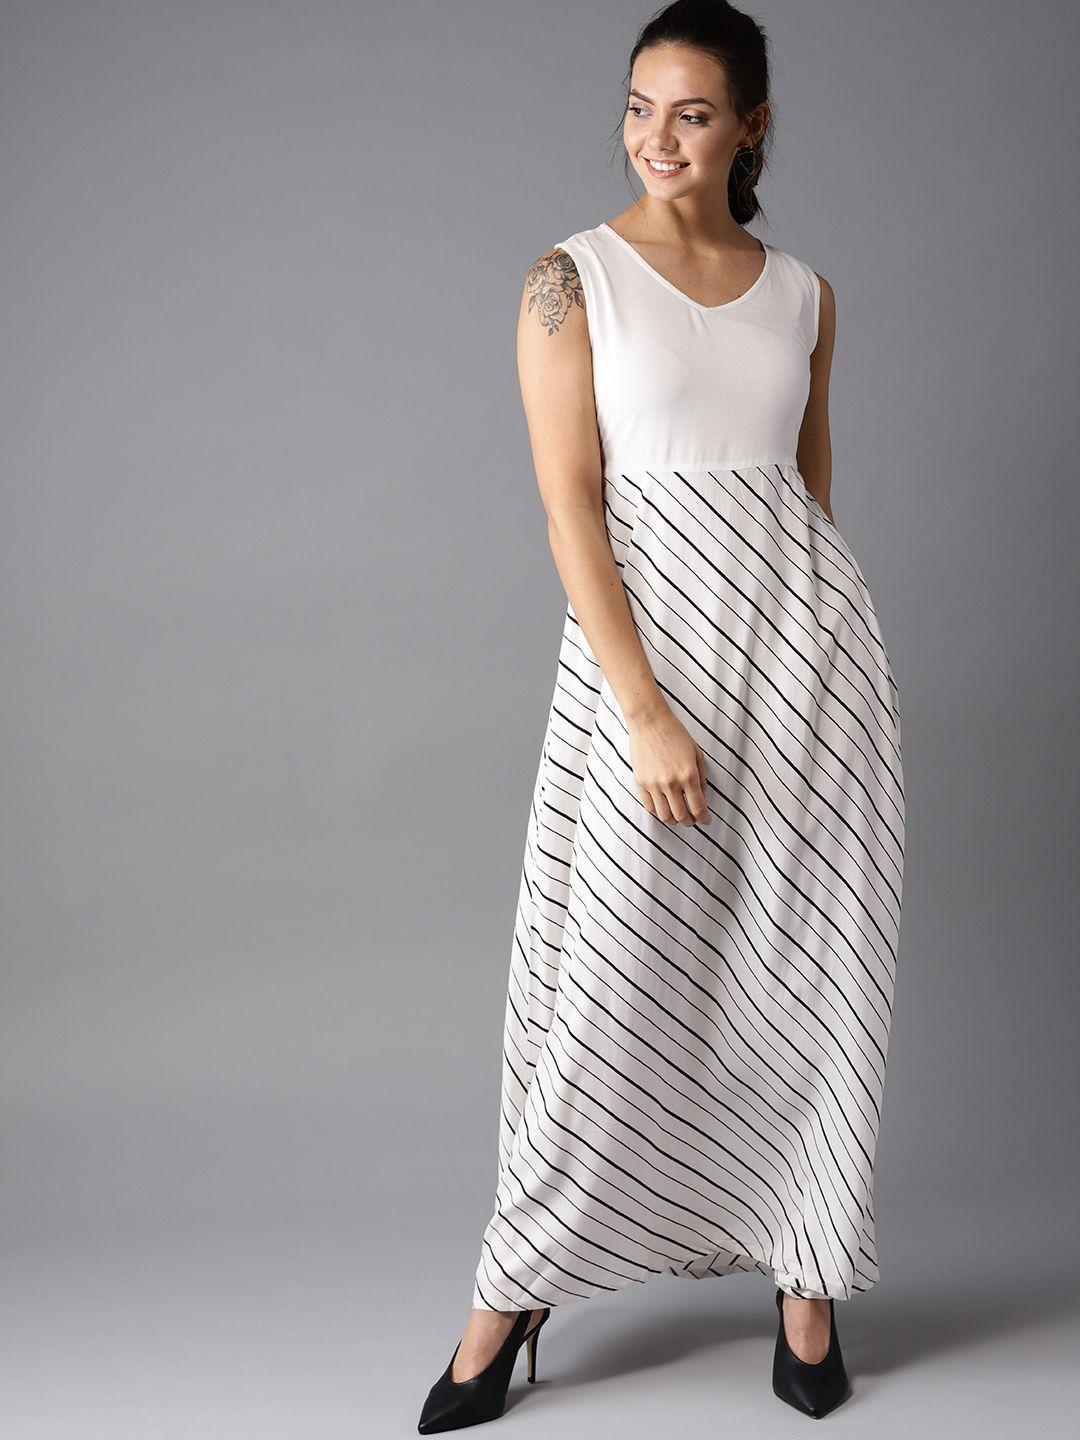 here&now-women-white-&-black-striped-maxi-dress